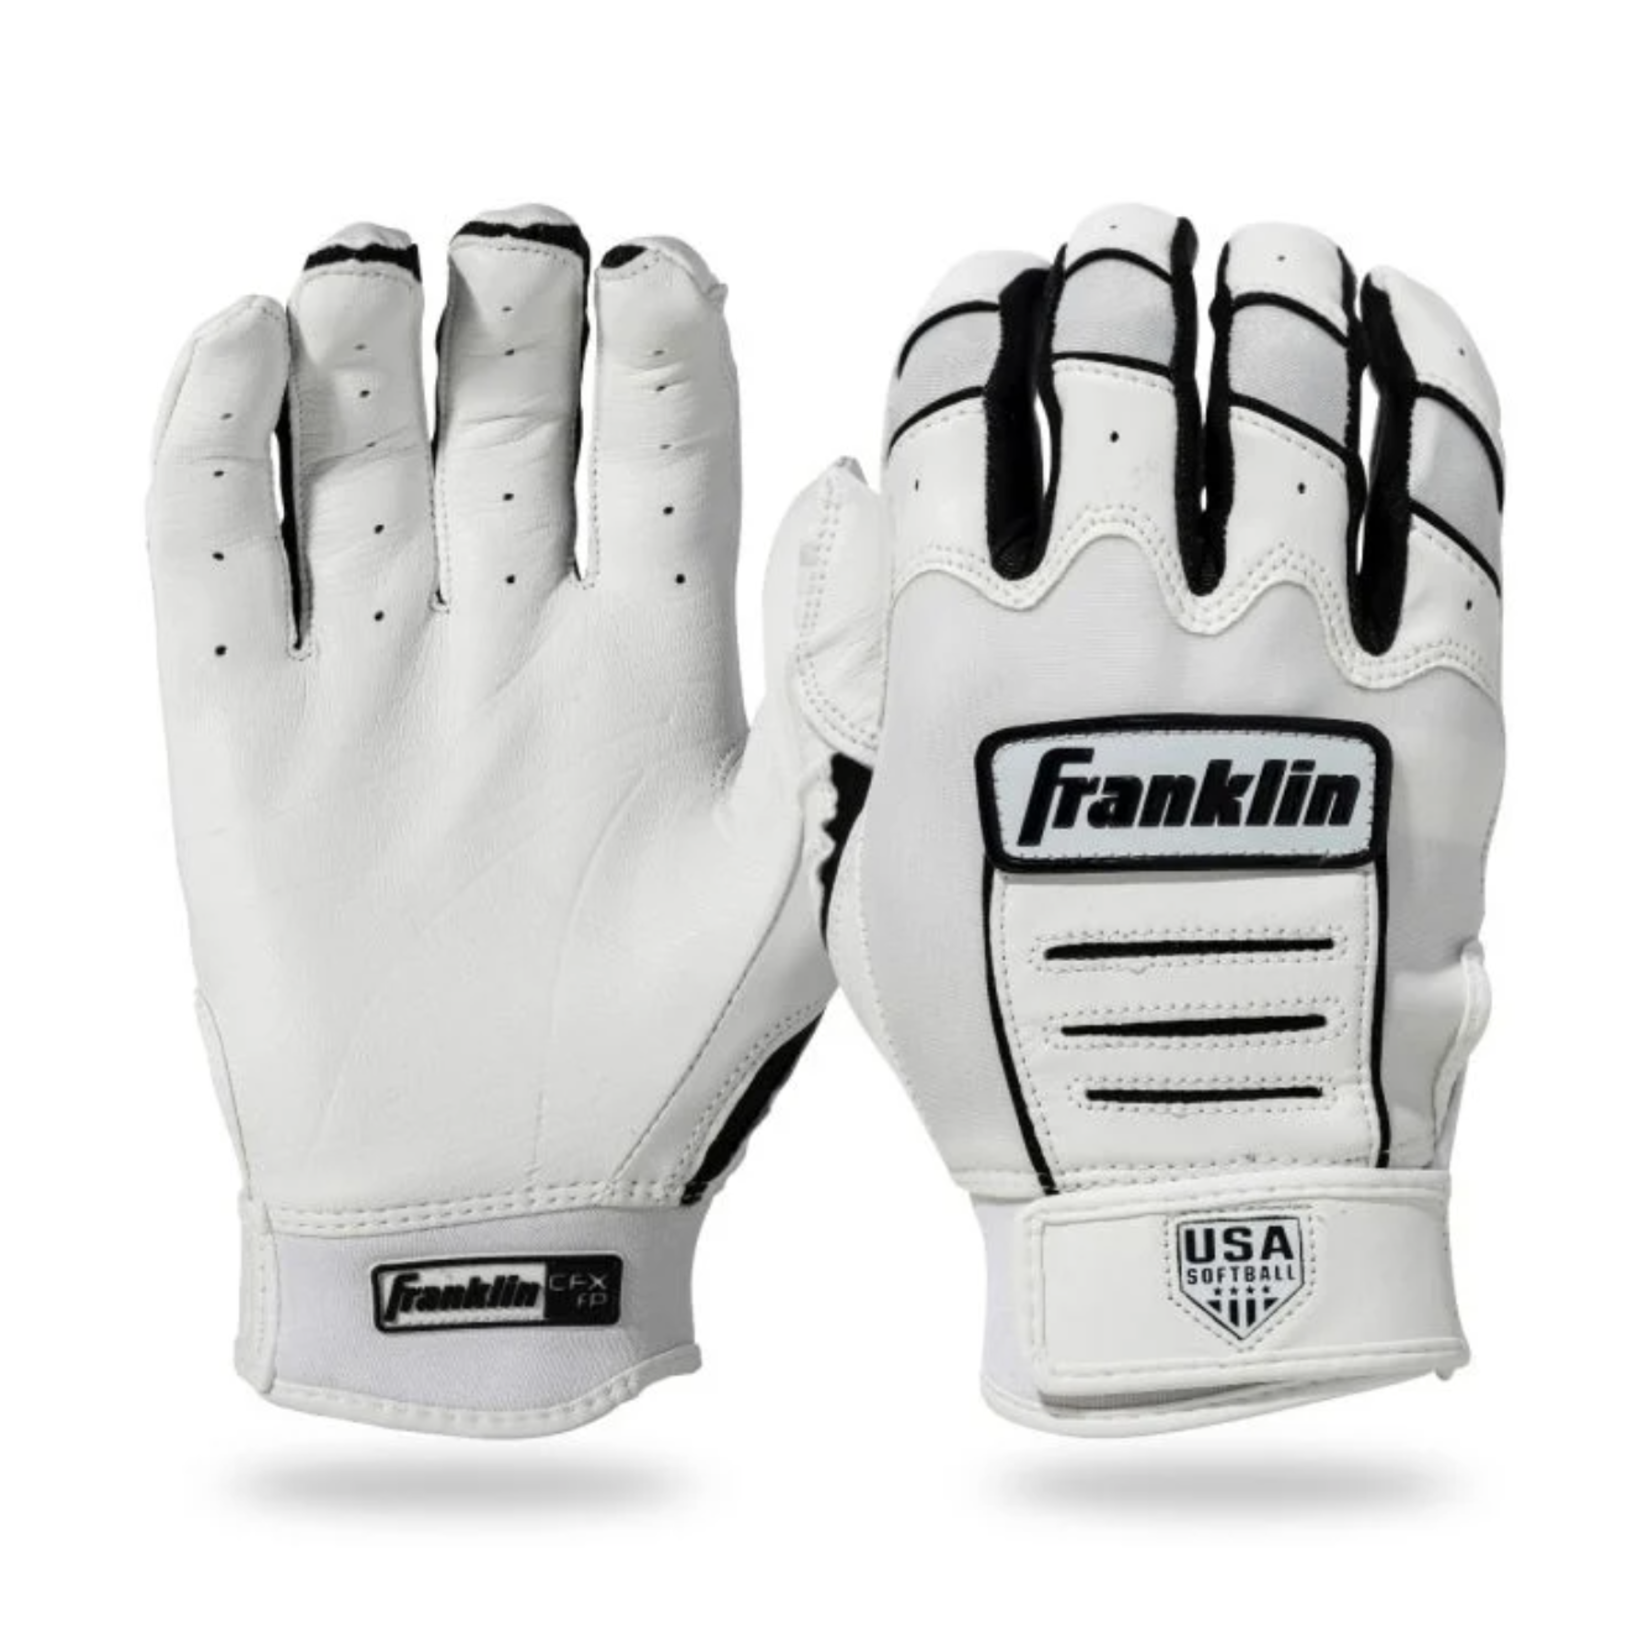 Women's Supreme Franklin CFX Pro Batting Glove in Black